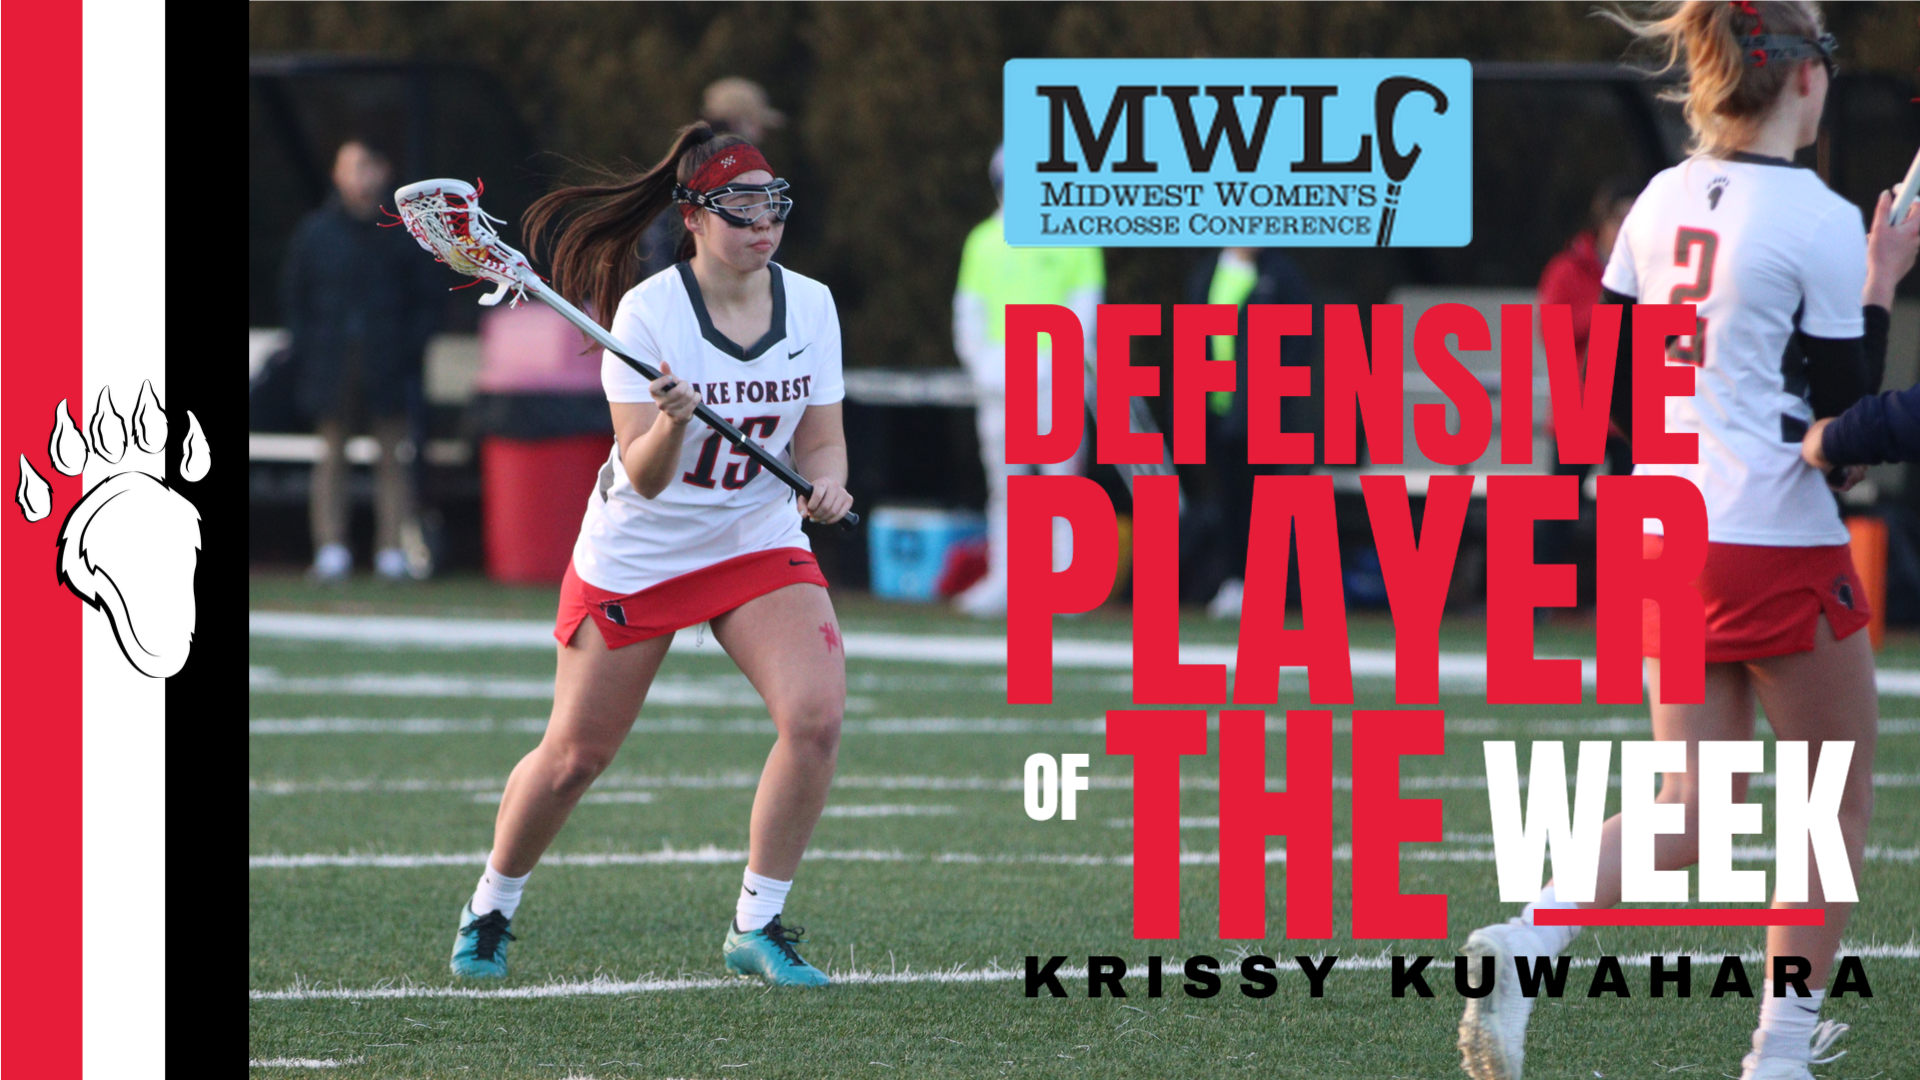 Krissy Kuwahara Named MWLC Defensive Player of the Week